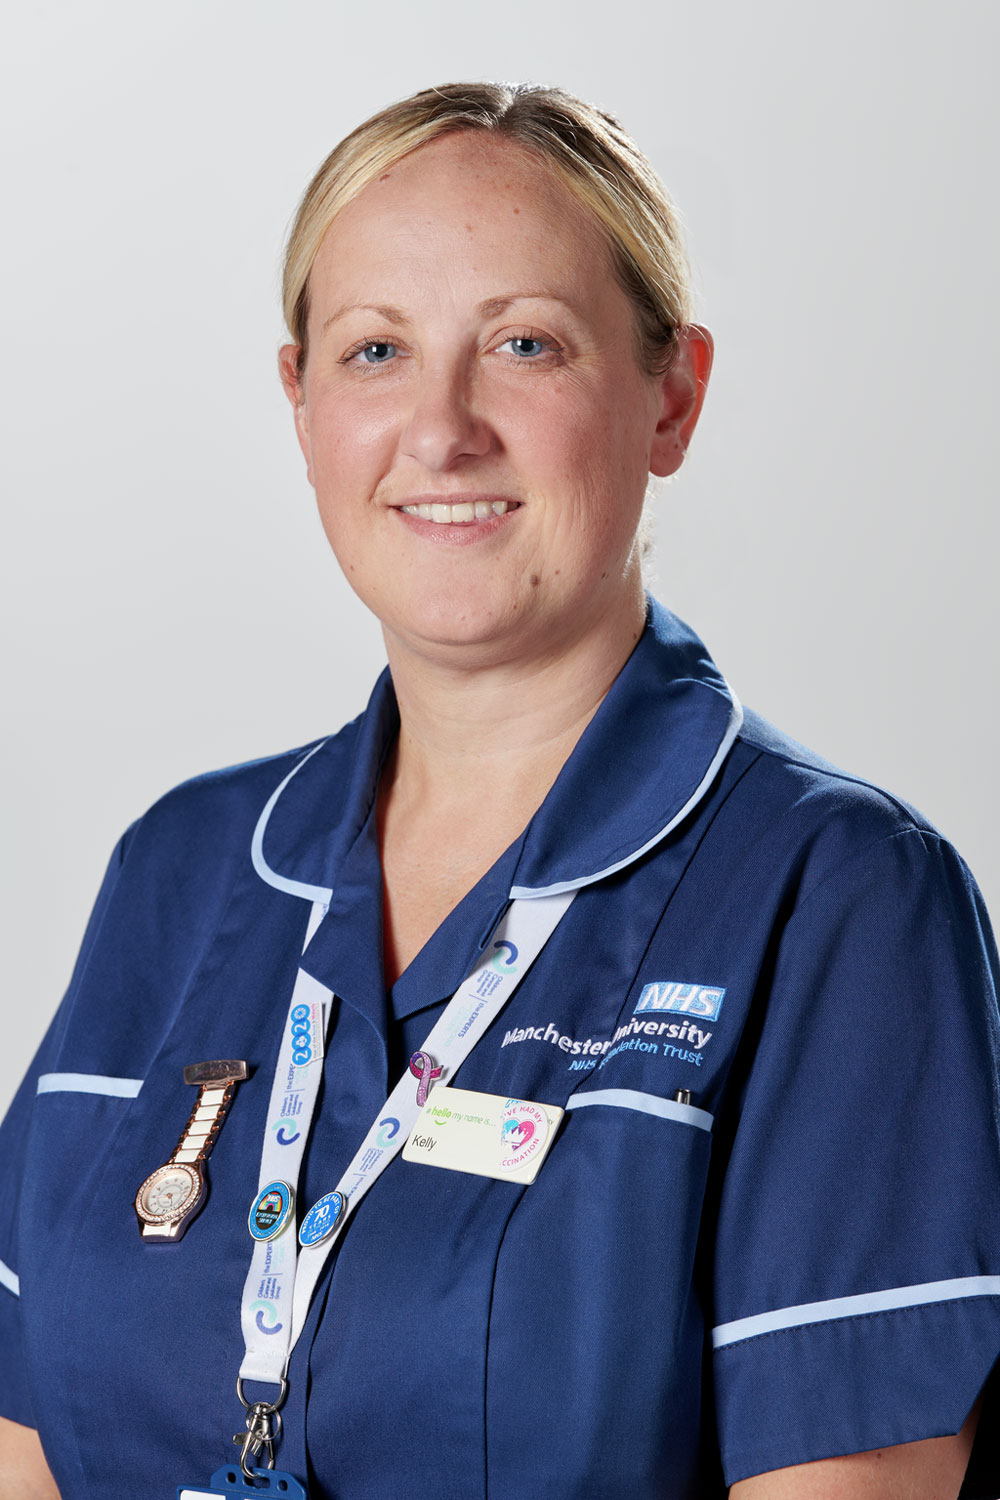 A female NHS nurse in uniform